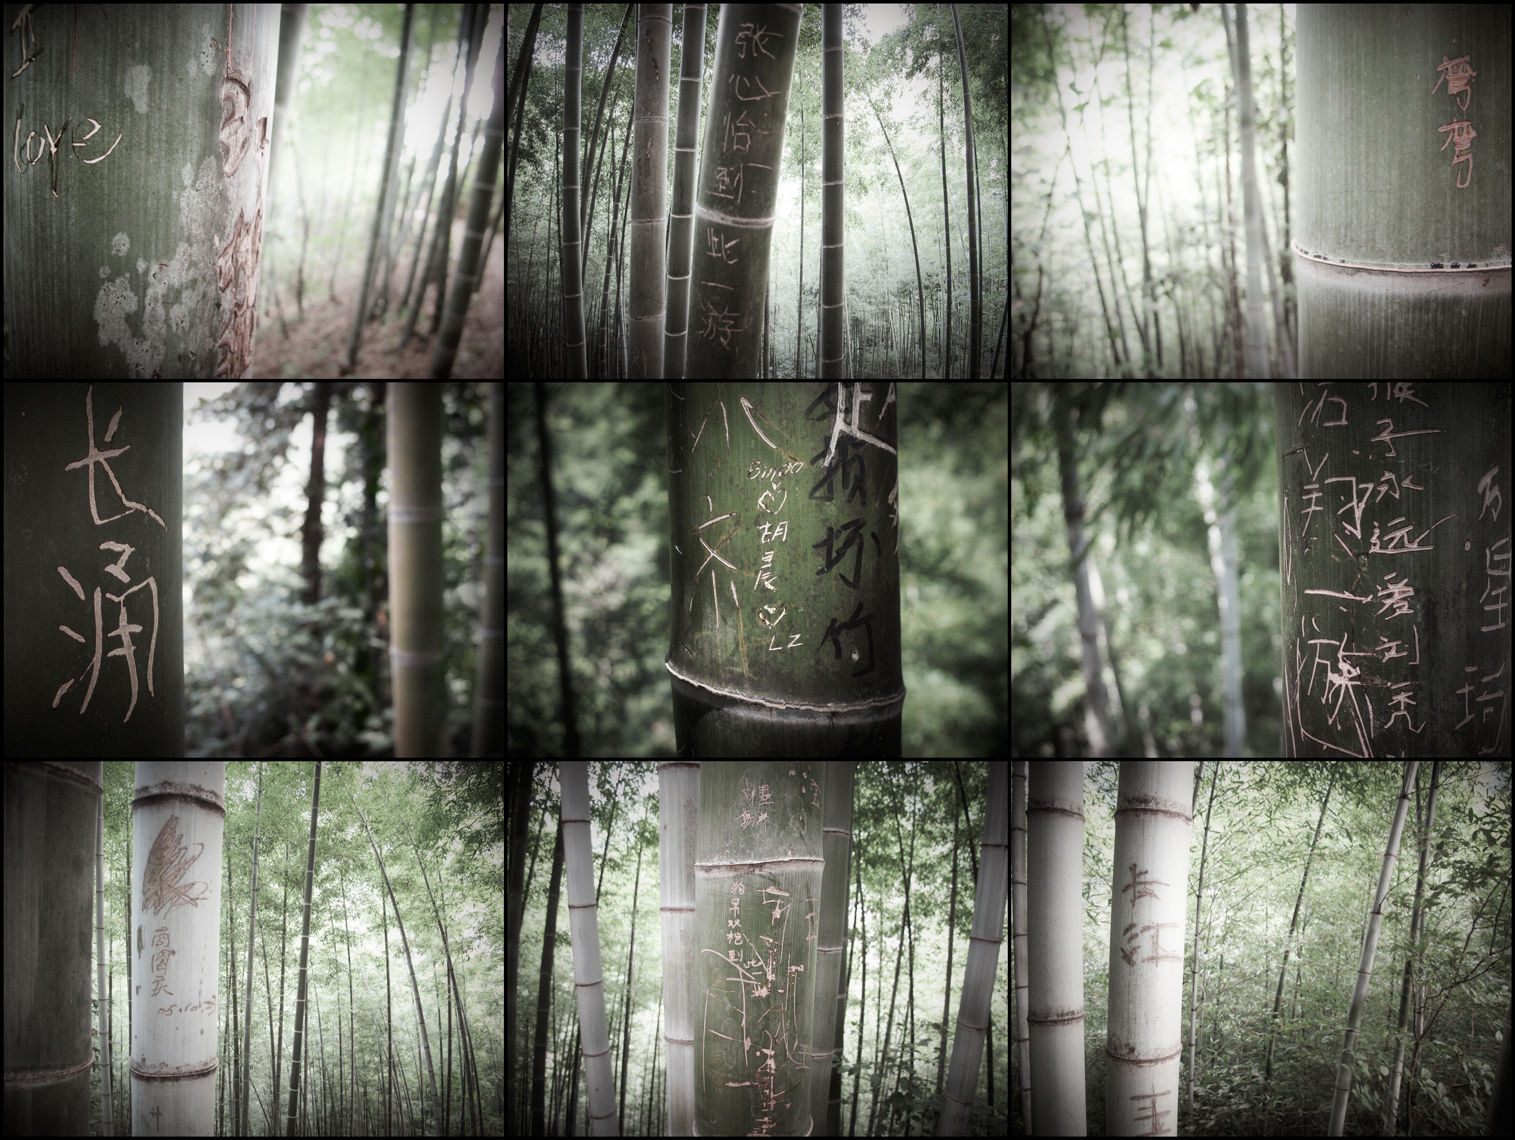 Jon Wyatt Photography - Graffiti on bamboo in bamboo forest in China